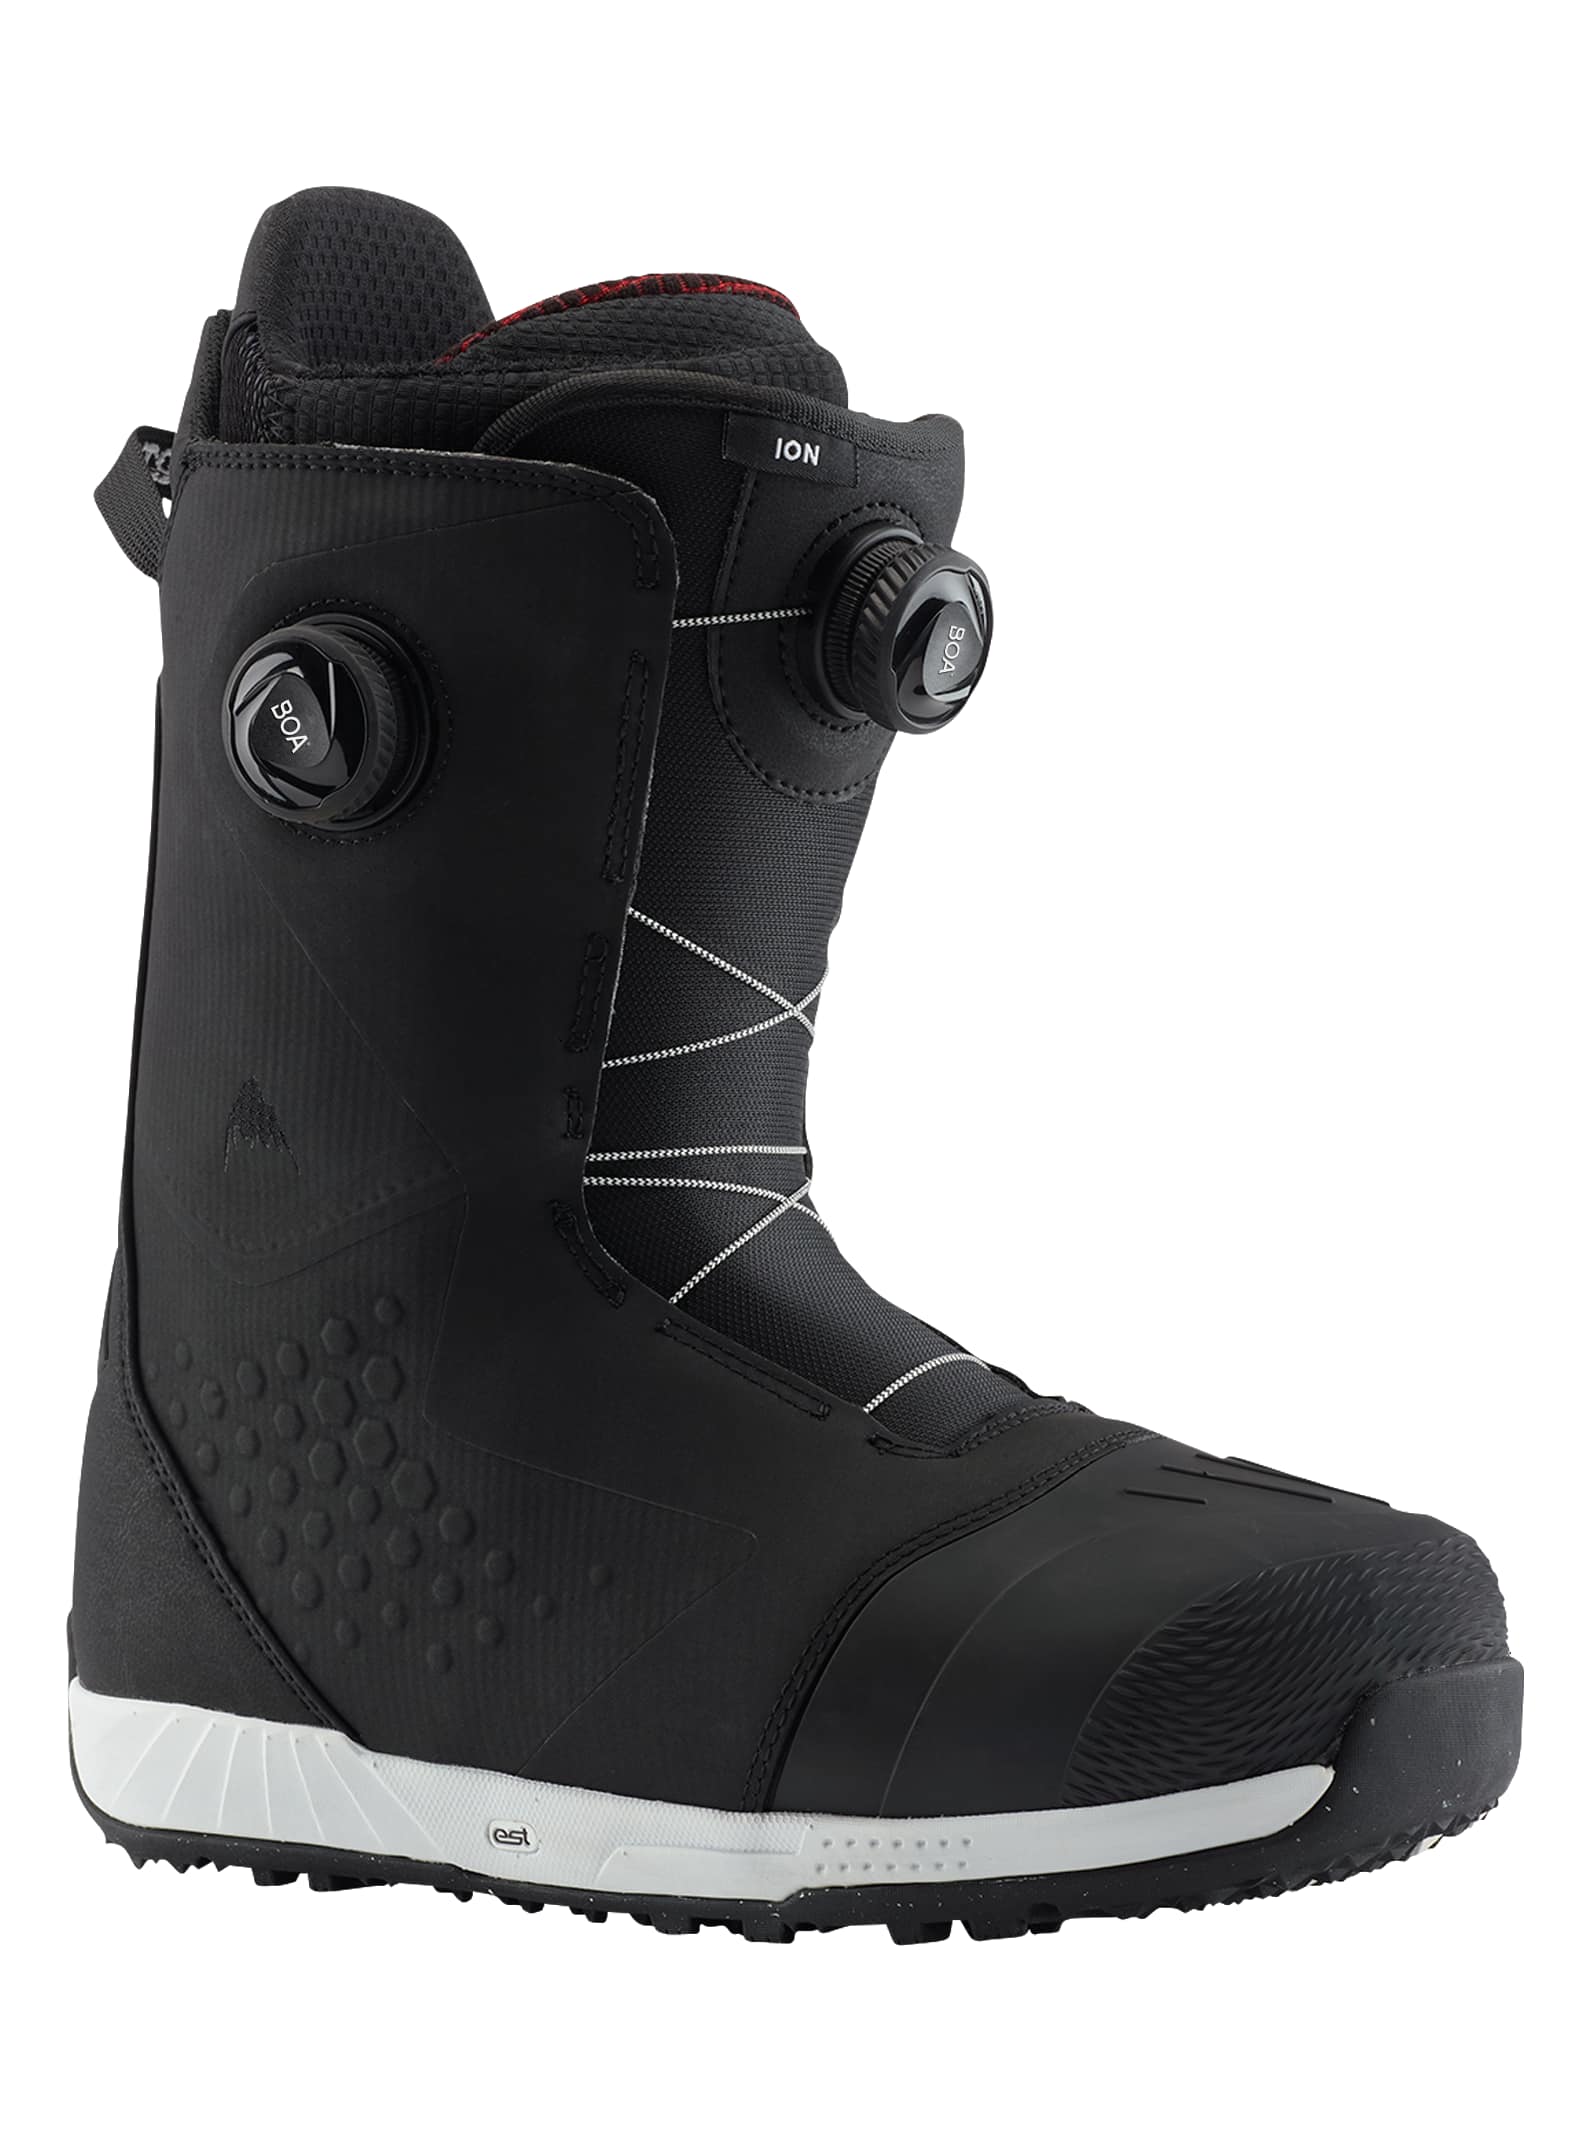 Burton - Boots de snowboard Ion Boa® homme, Black, 115